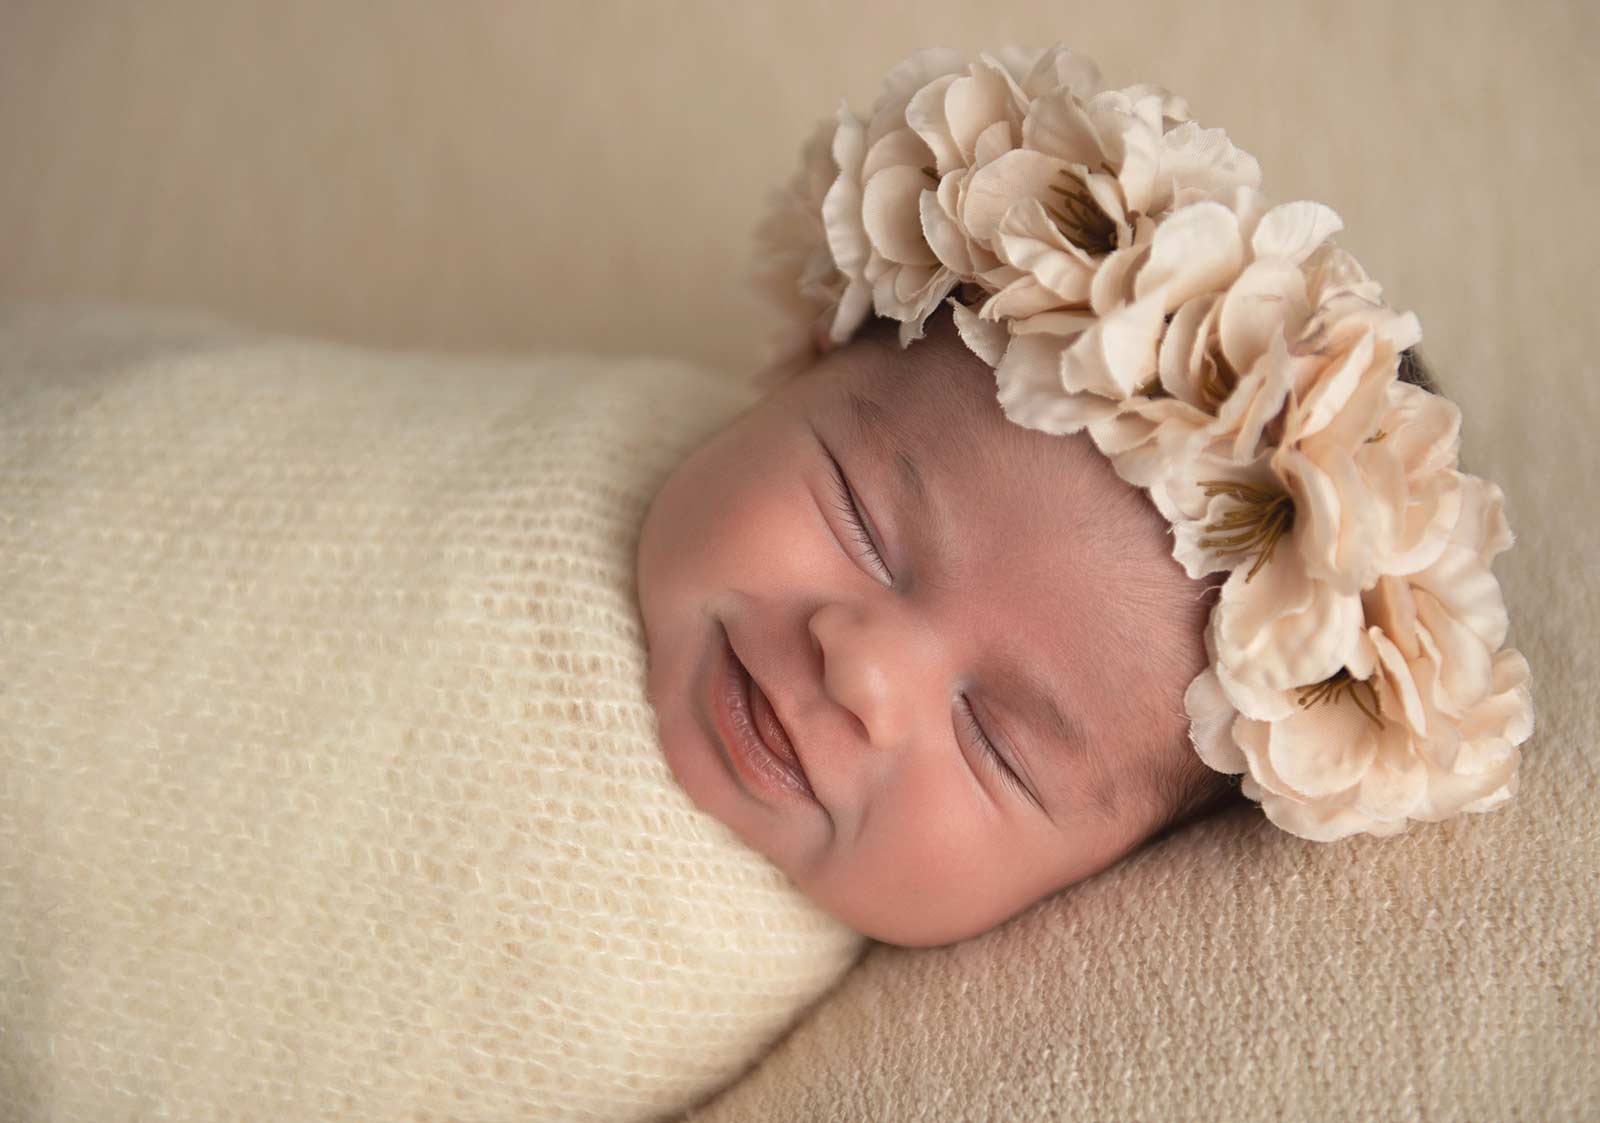 Sleeping newborn in beige knits and flower headband smiling